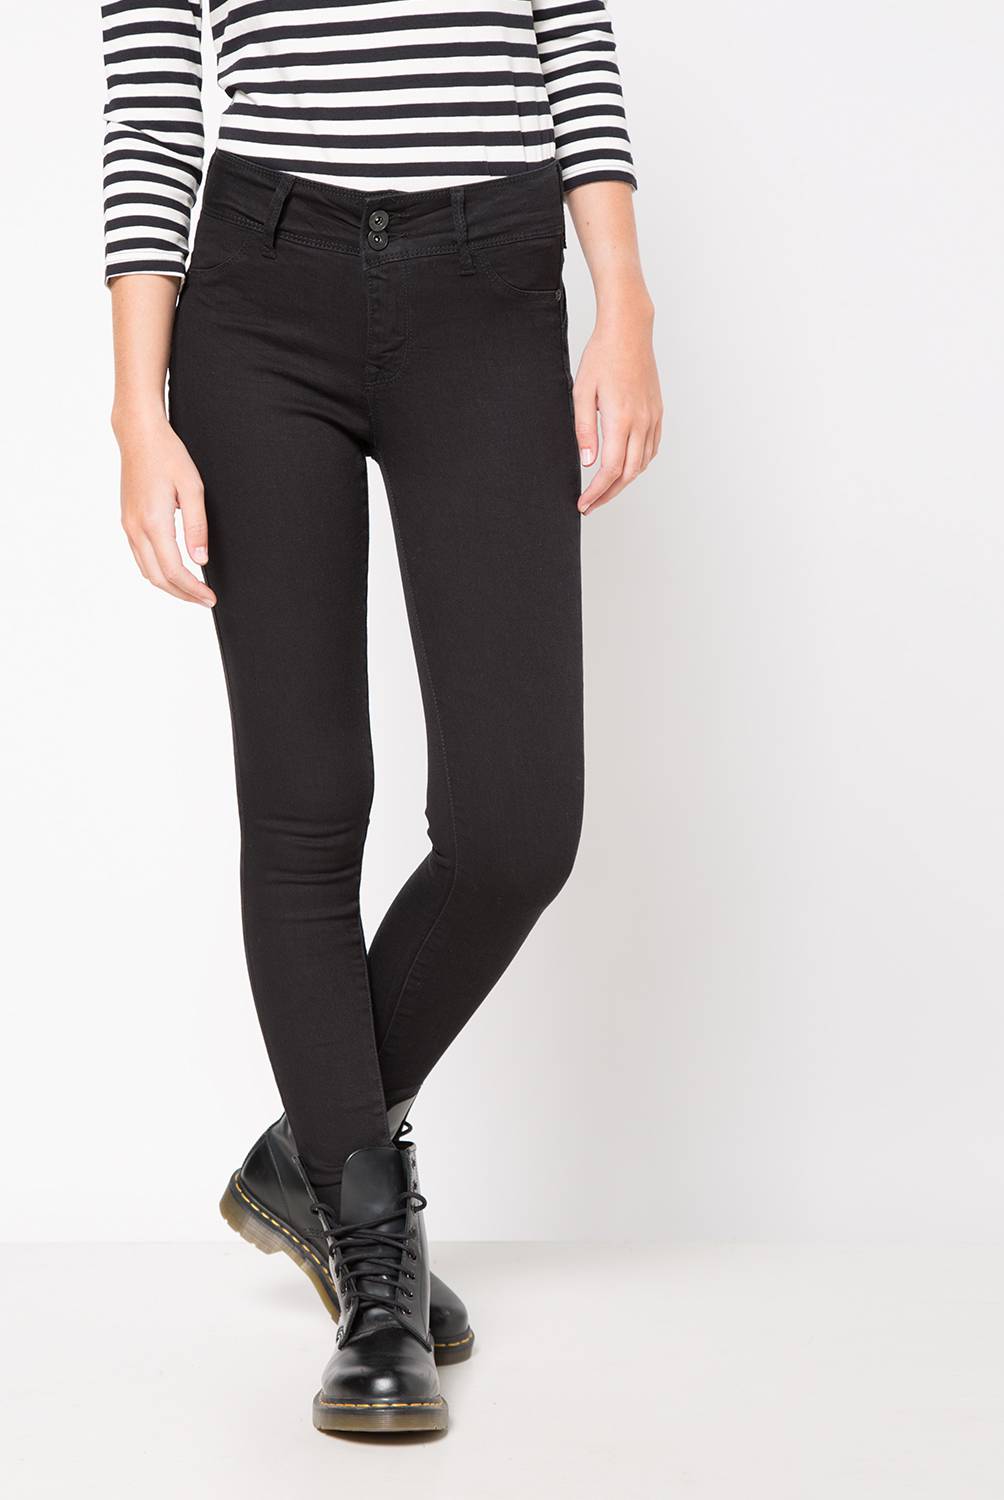 SYBILLA - Jeans Denim Regular Tiro Medio Mujer